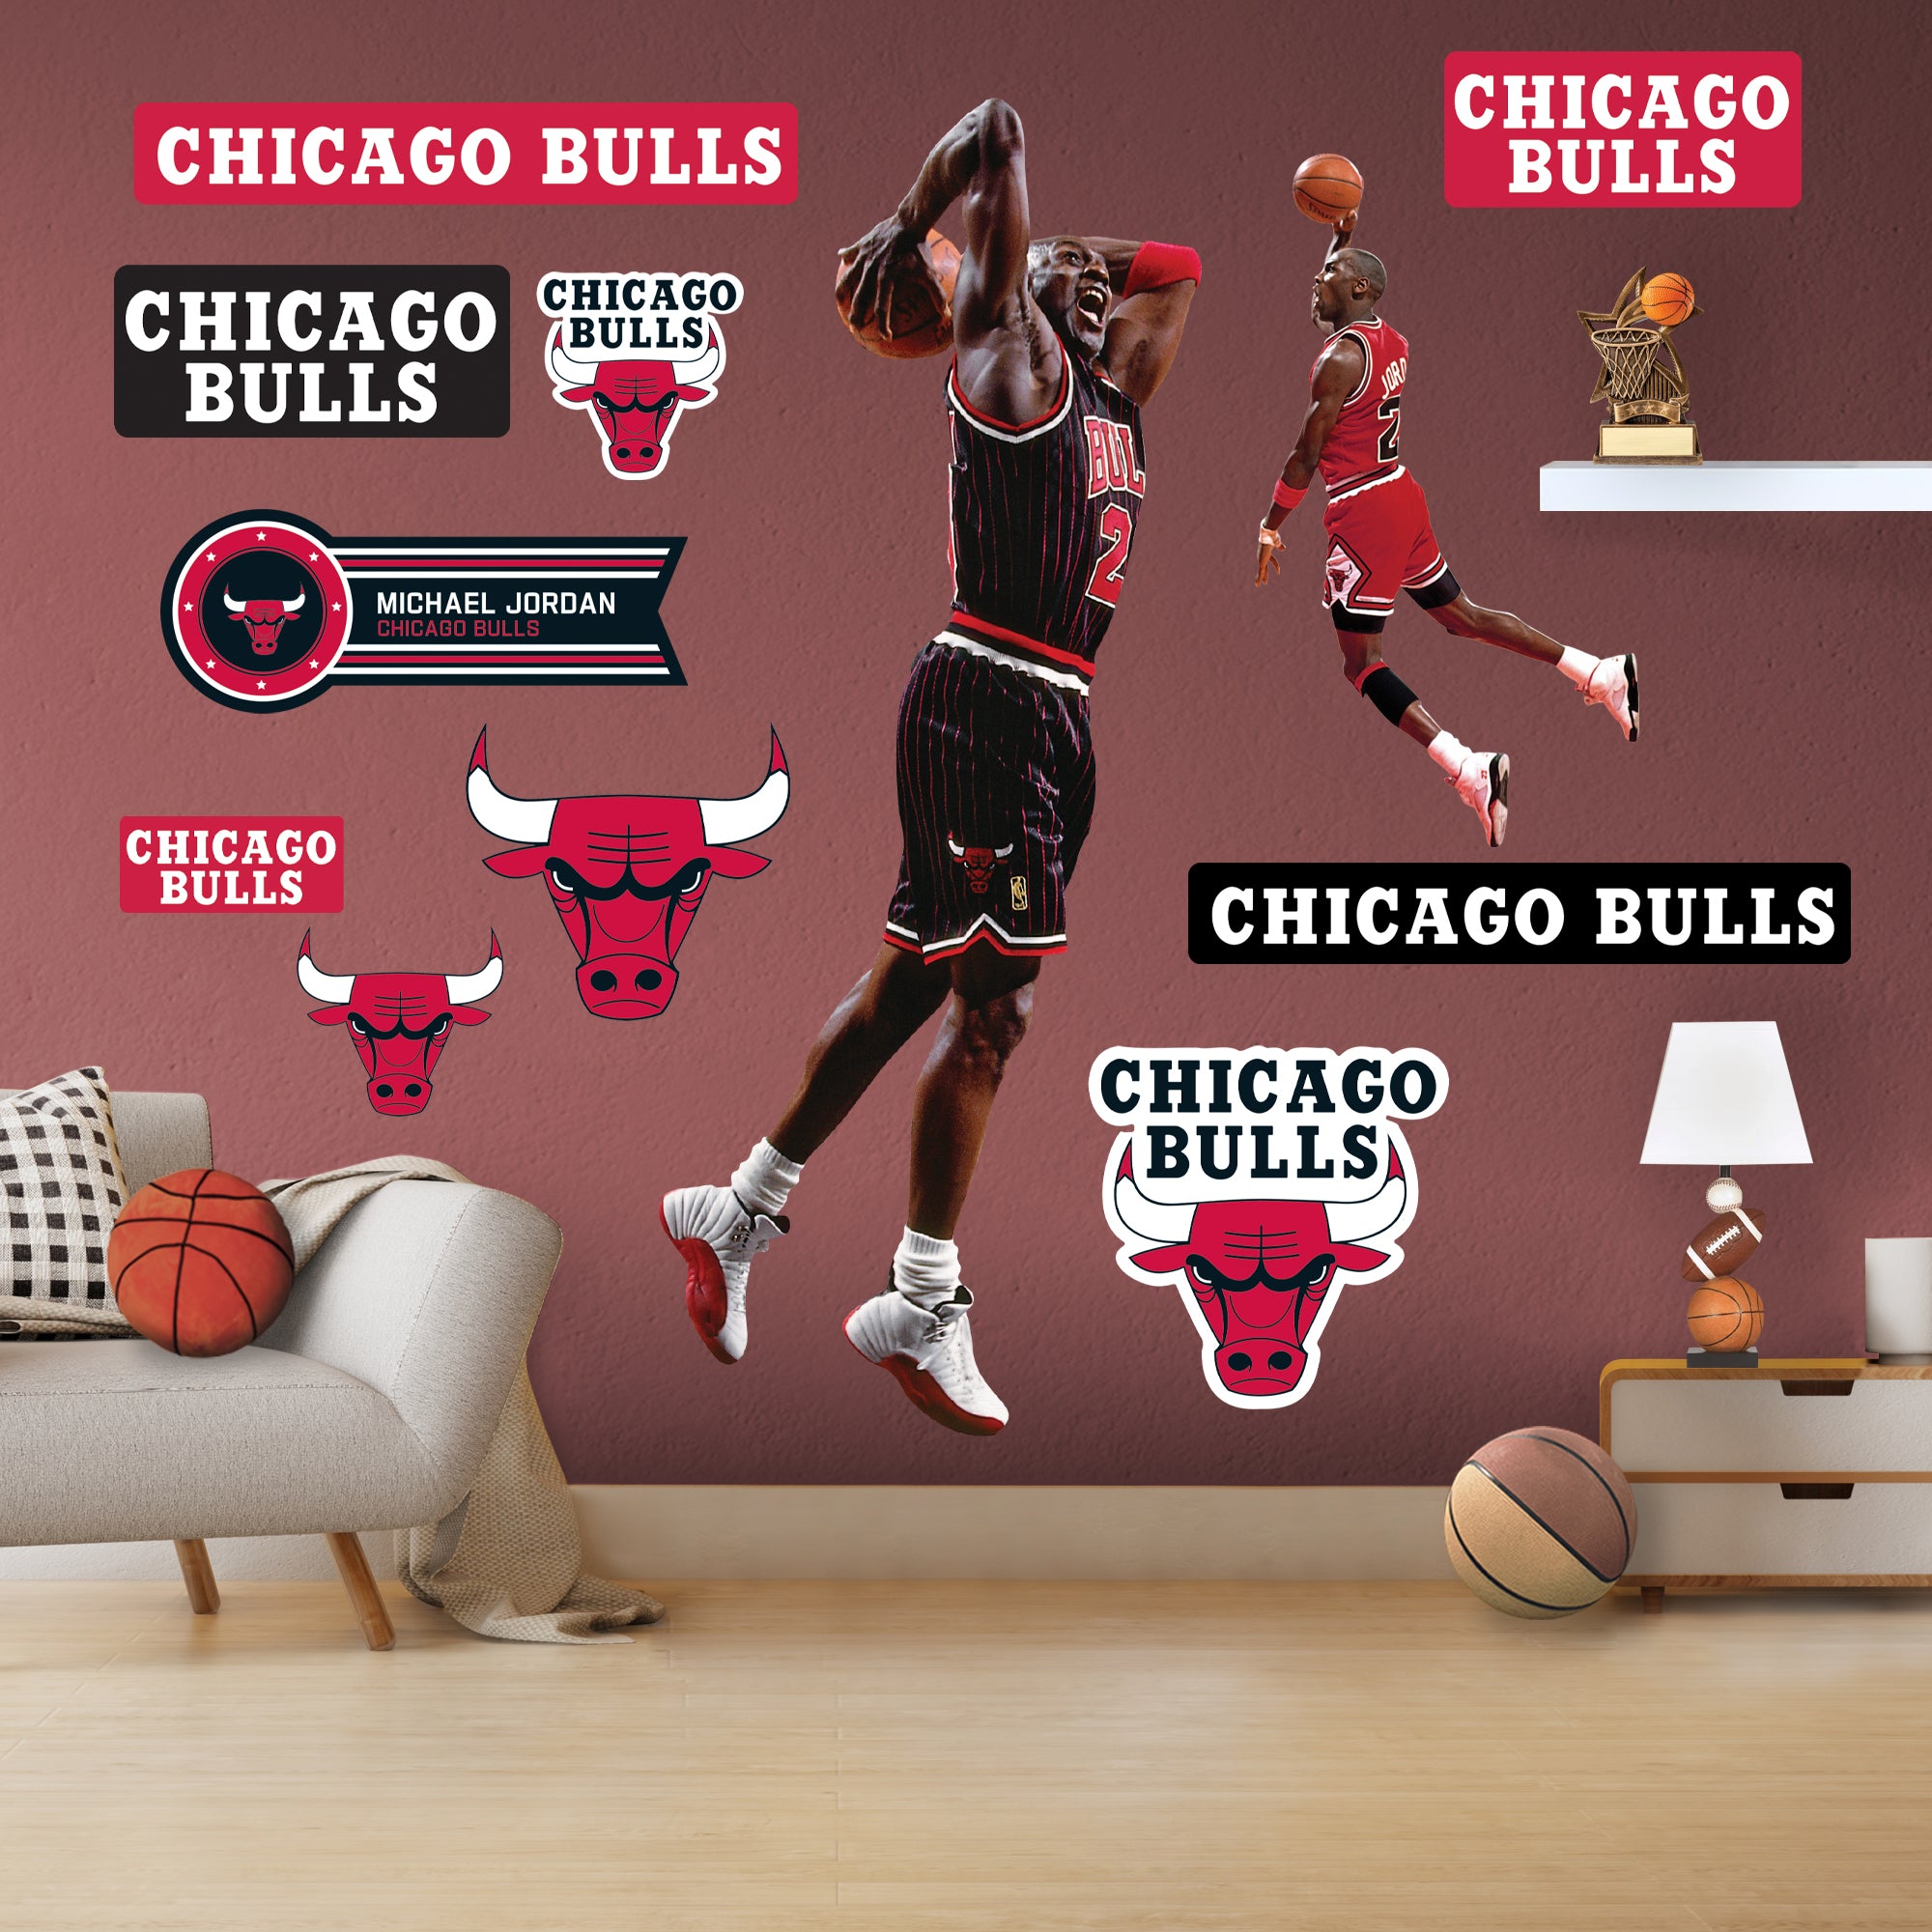 Details of Nikola Vucevics NBA Season 20222023 Deal With the Chicago Bulls